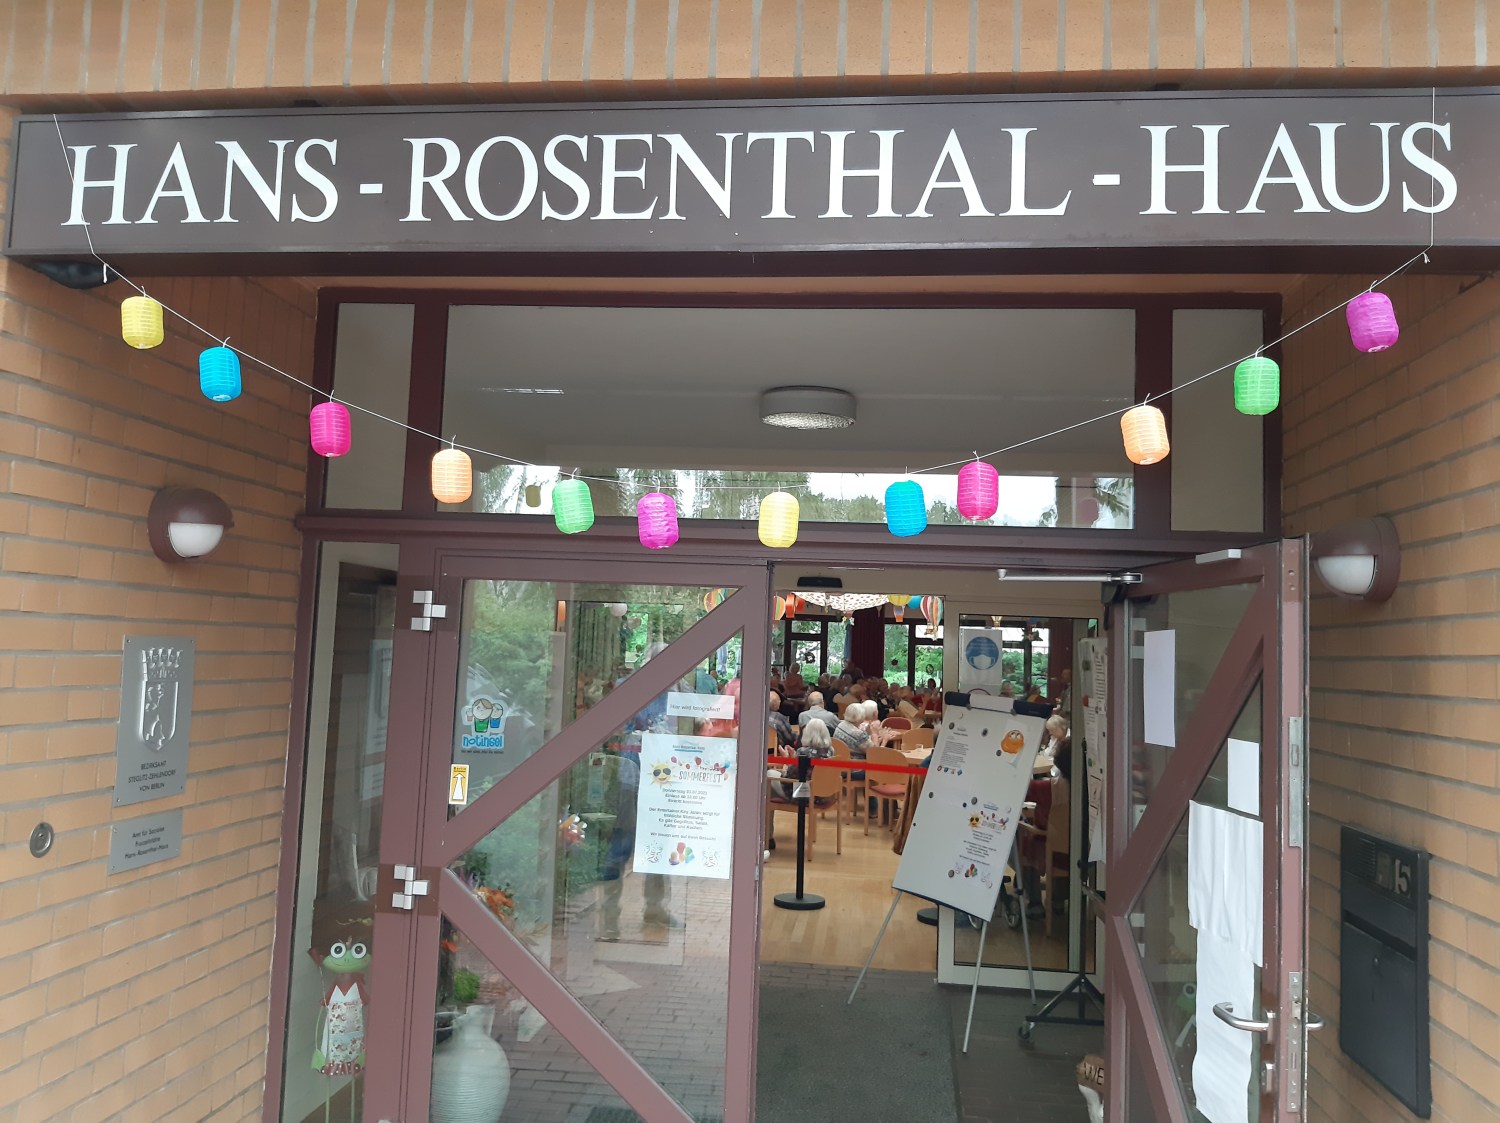 Sommerfest des Hans-Rosenthal-Hauses am 01.07.2021